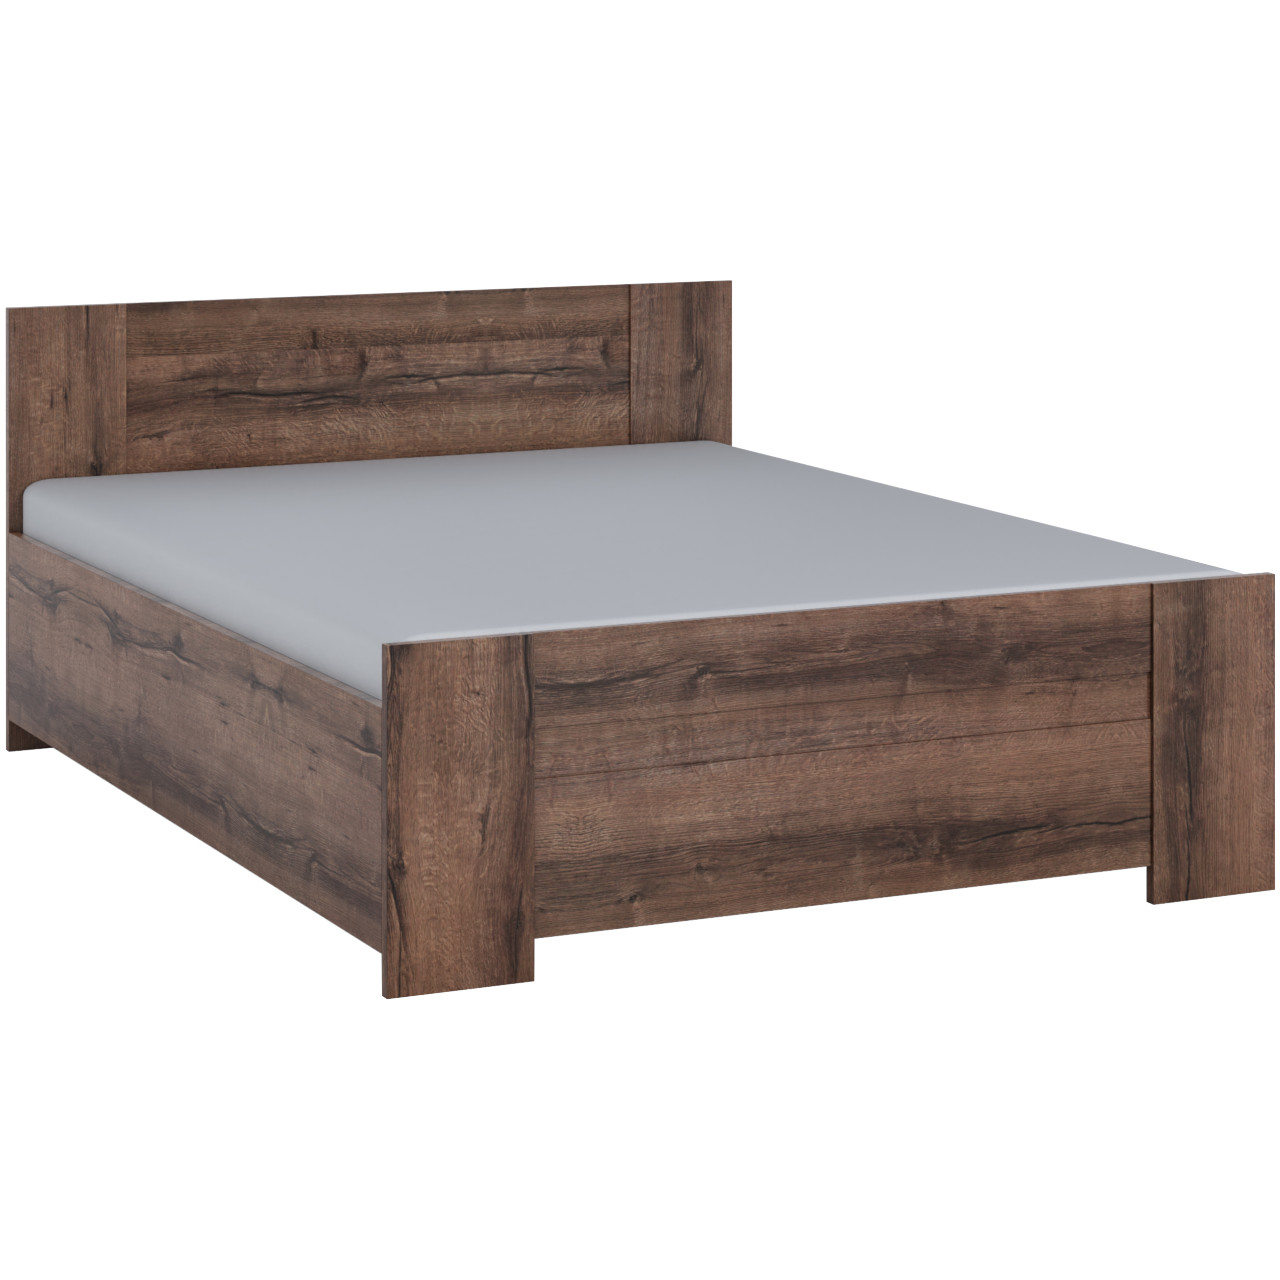 Bed with Storage 160x200 BONO BO02 monastery oak